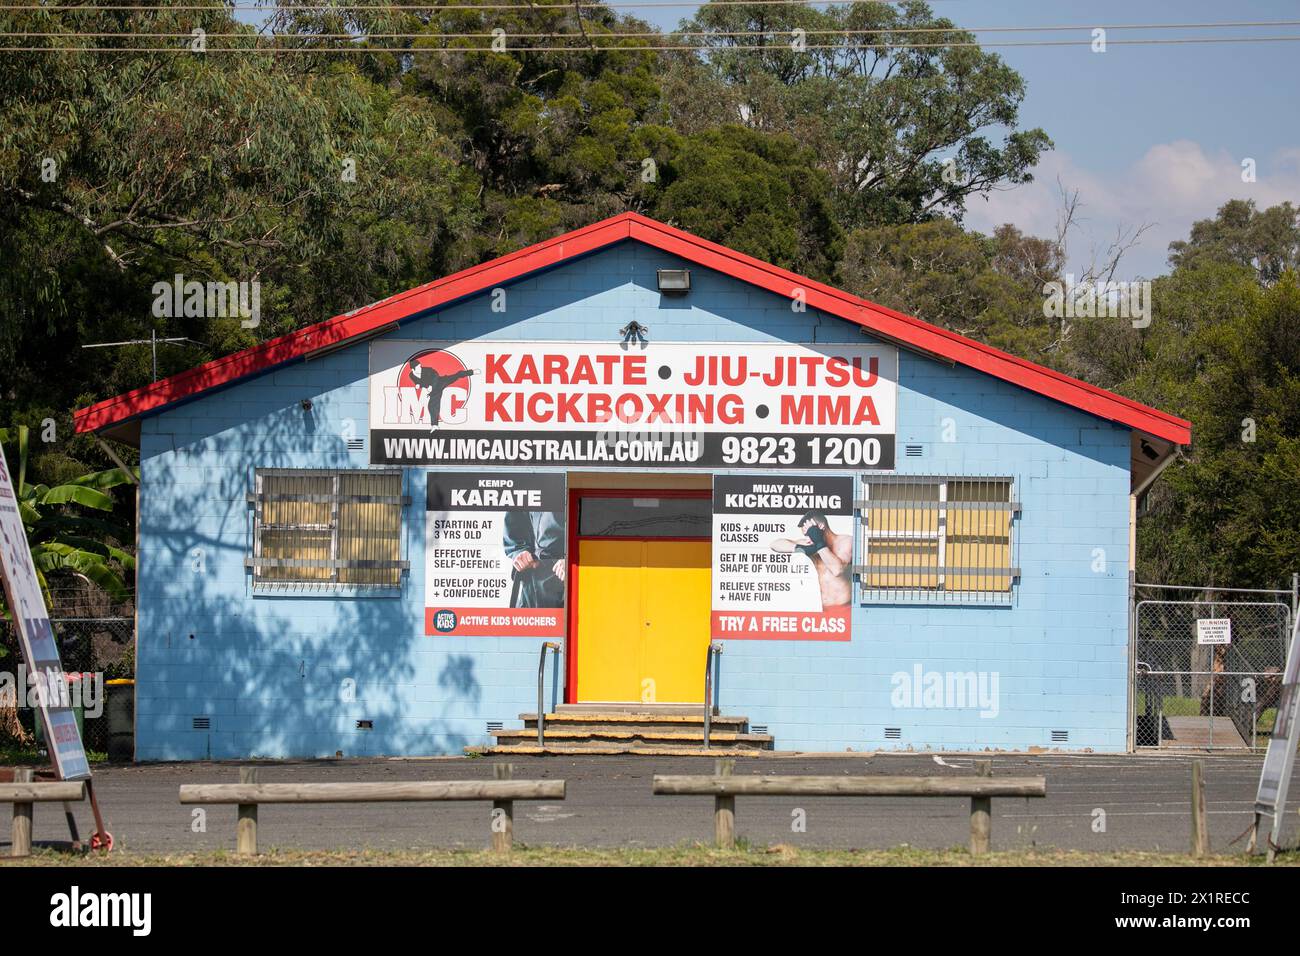 International Martial Arts Centre, kickboxing, karate and jiu-jitsu in Kemps Creek suburb, Greater Western Sydney,NSW,Australia Stock Photo